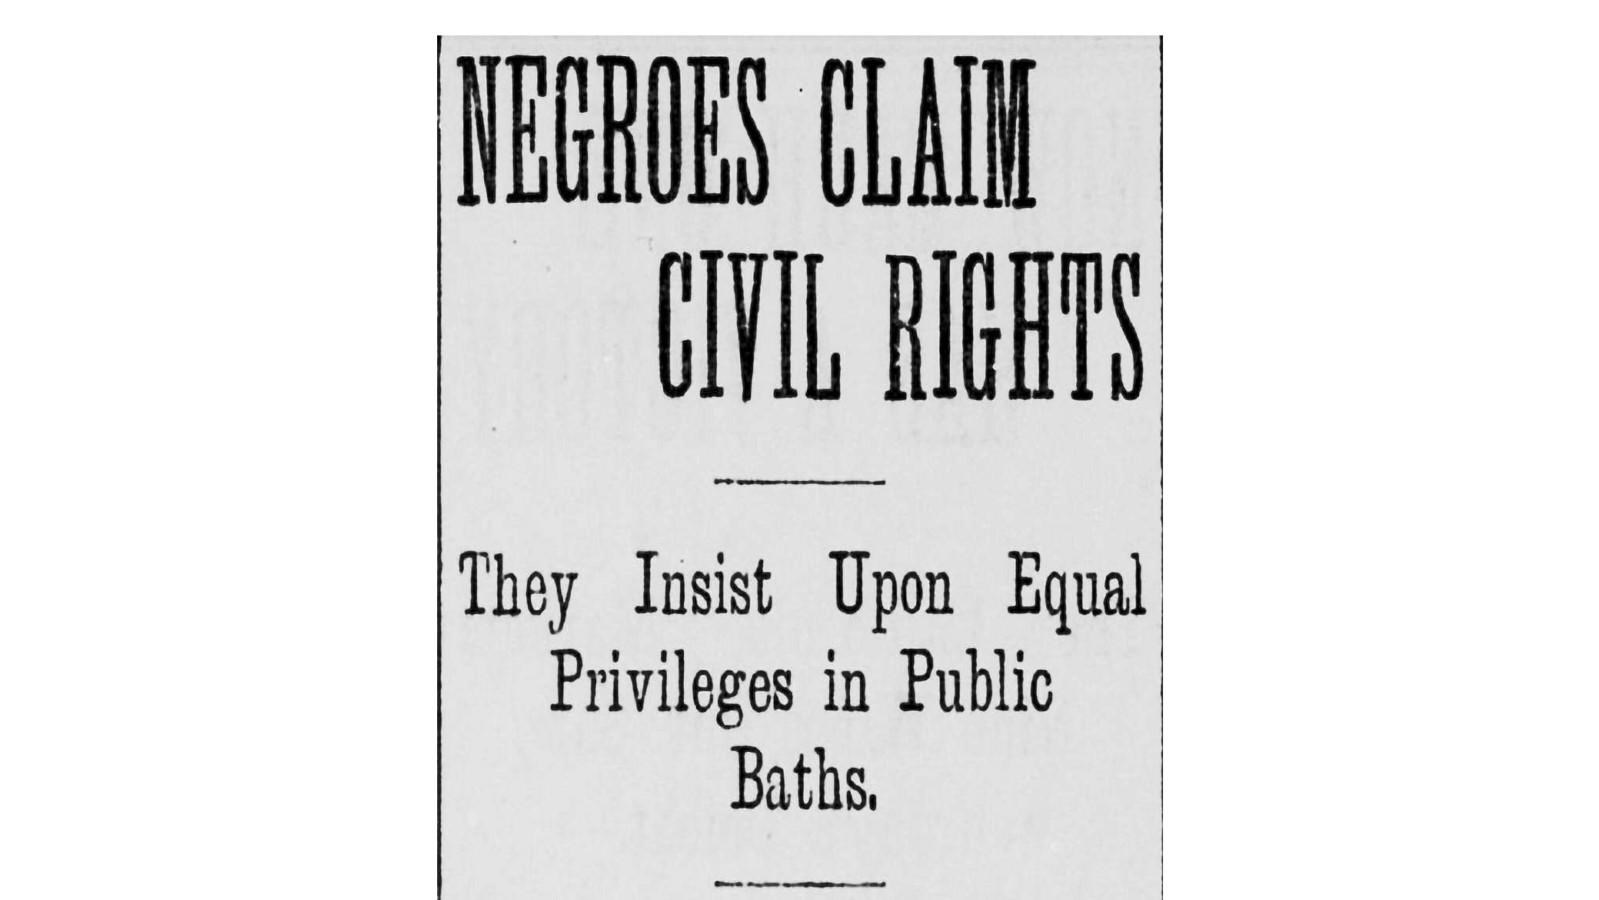  August 2, 1897 newspaper headline regarding the law suit reads, 